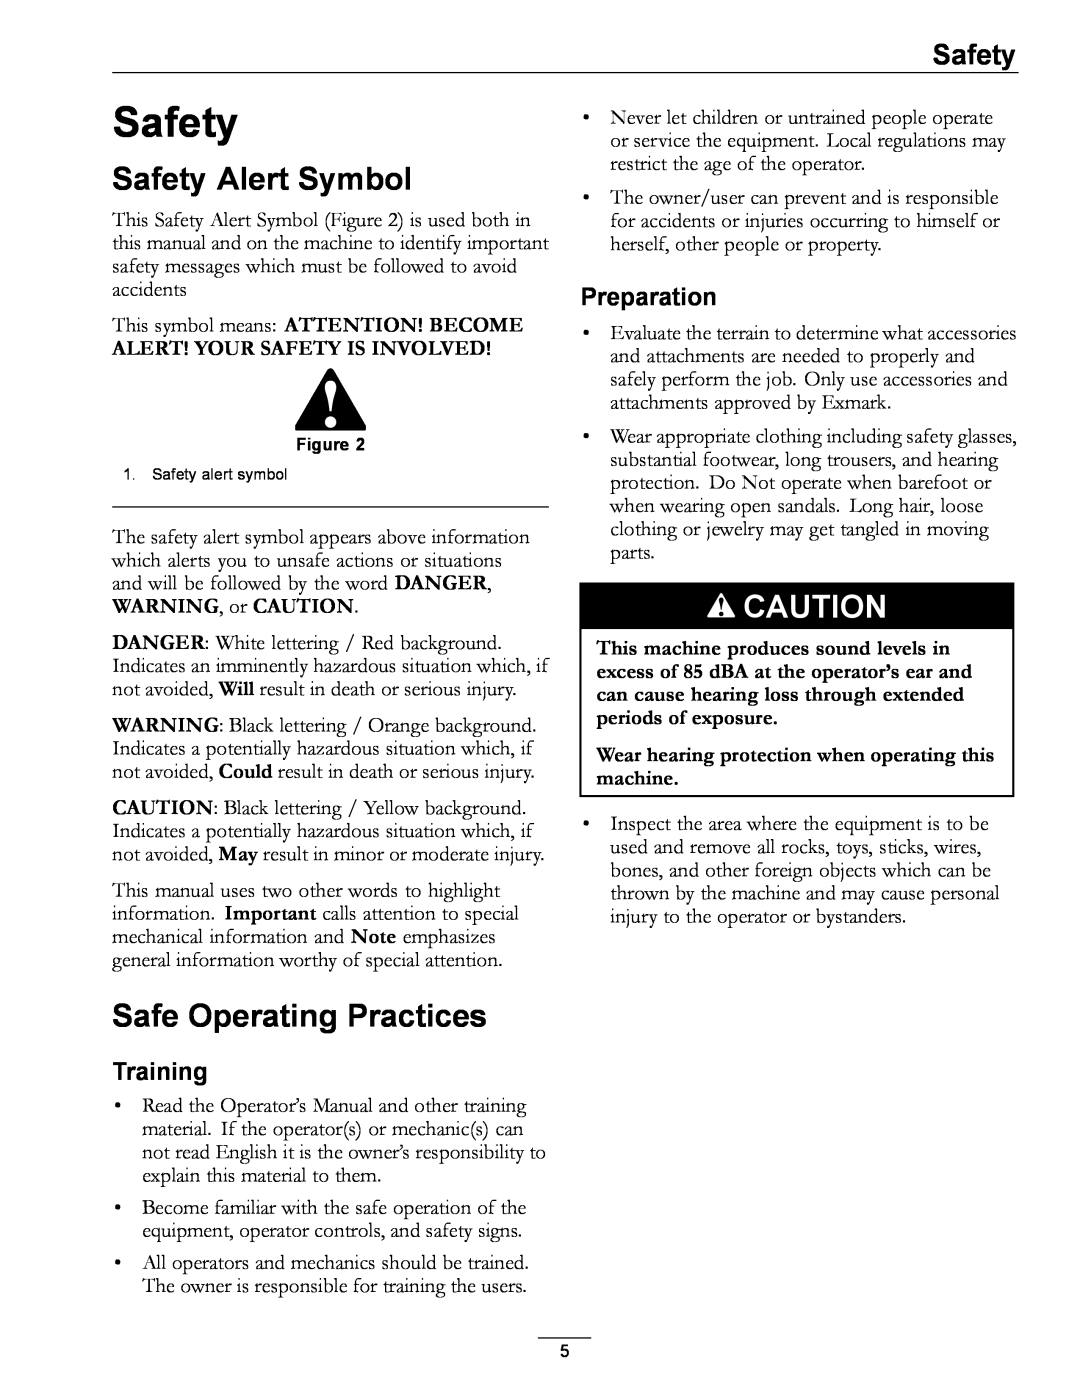 Exmark 4500-355 Safety Alert Symbol, Safe Operating Practices, Training, Preparation, Alert! Your Safety Is Involved 